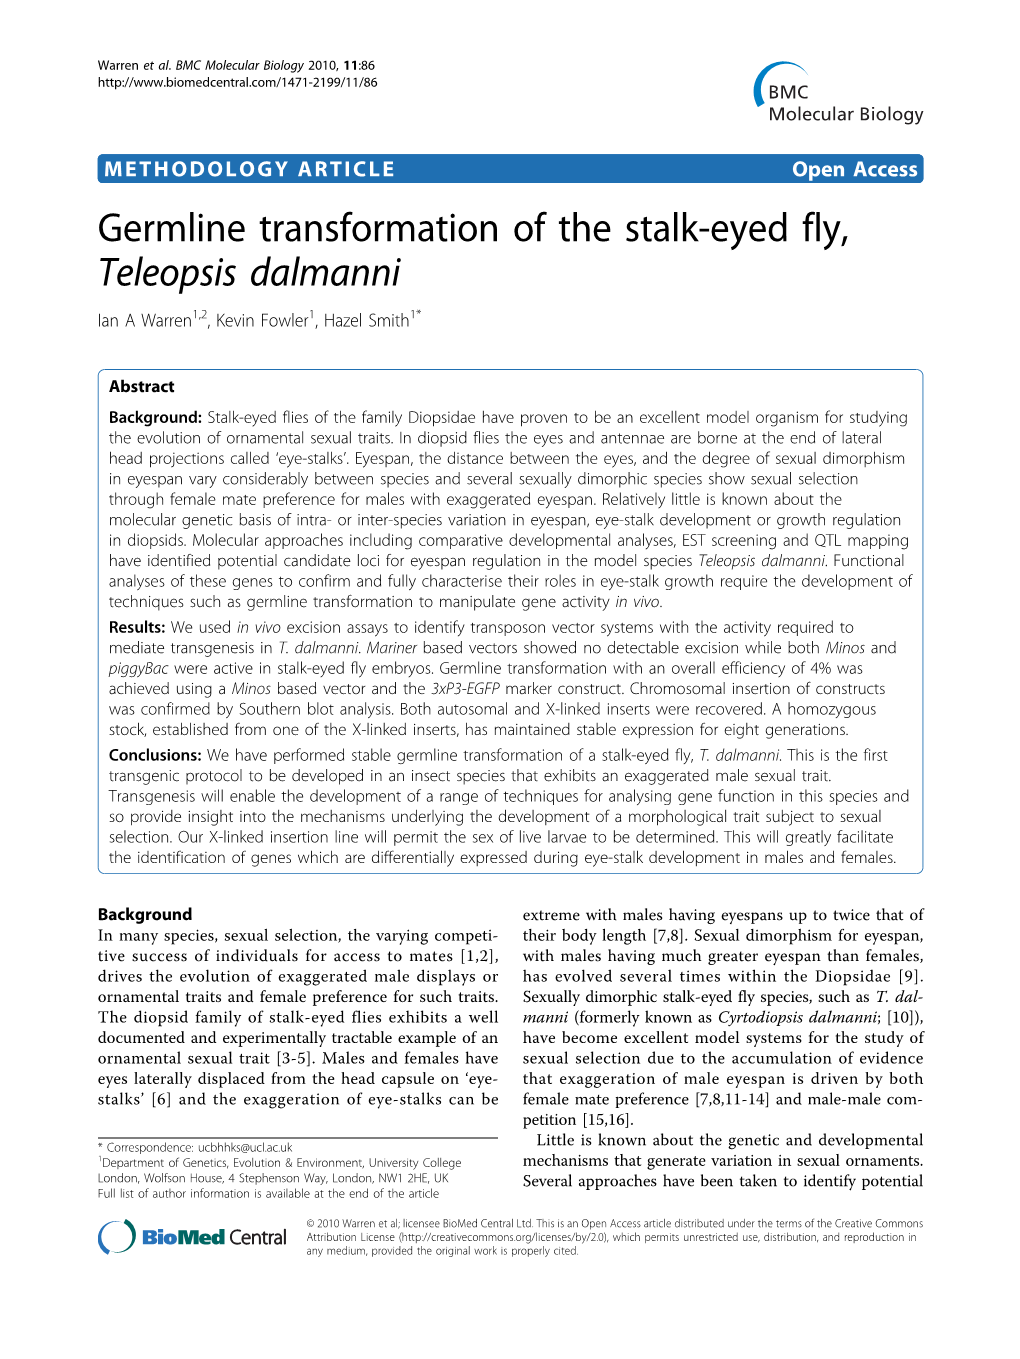 Germline Transformation of the Stalk-Eyed Fly, Teleopsis Dalmanni Ian a Warren1,2, Kevin Fowler1, Hazel Smith1*